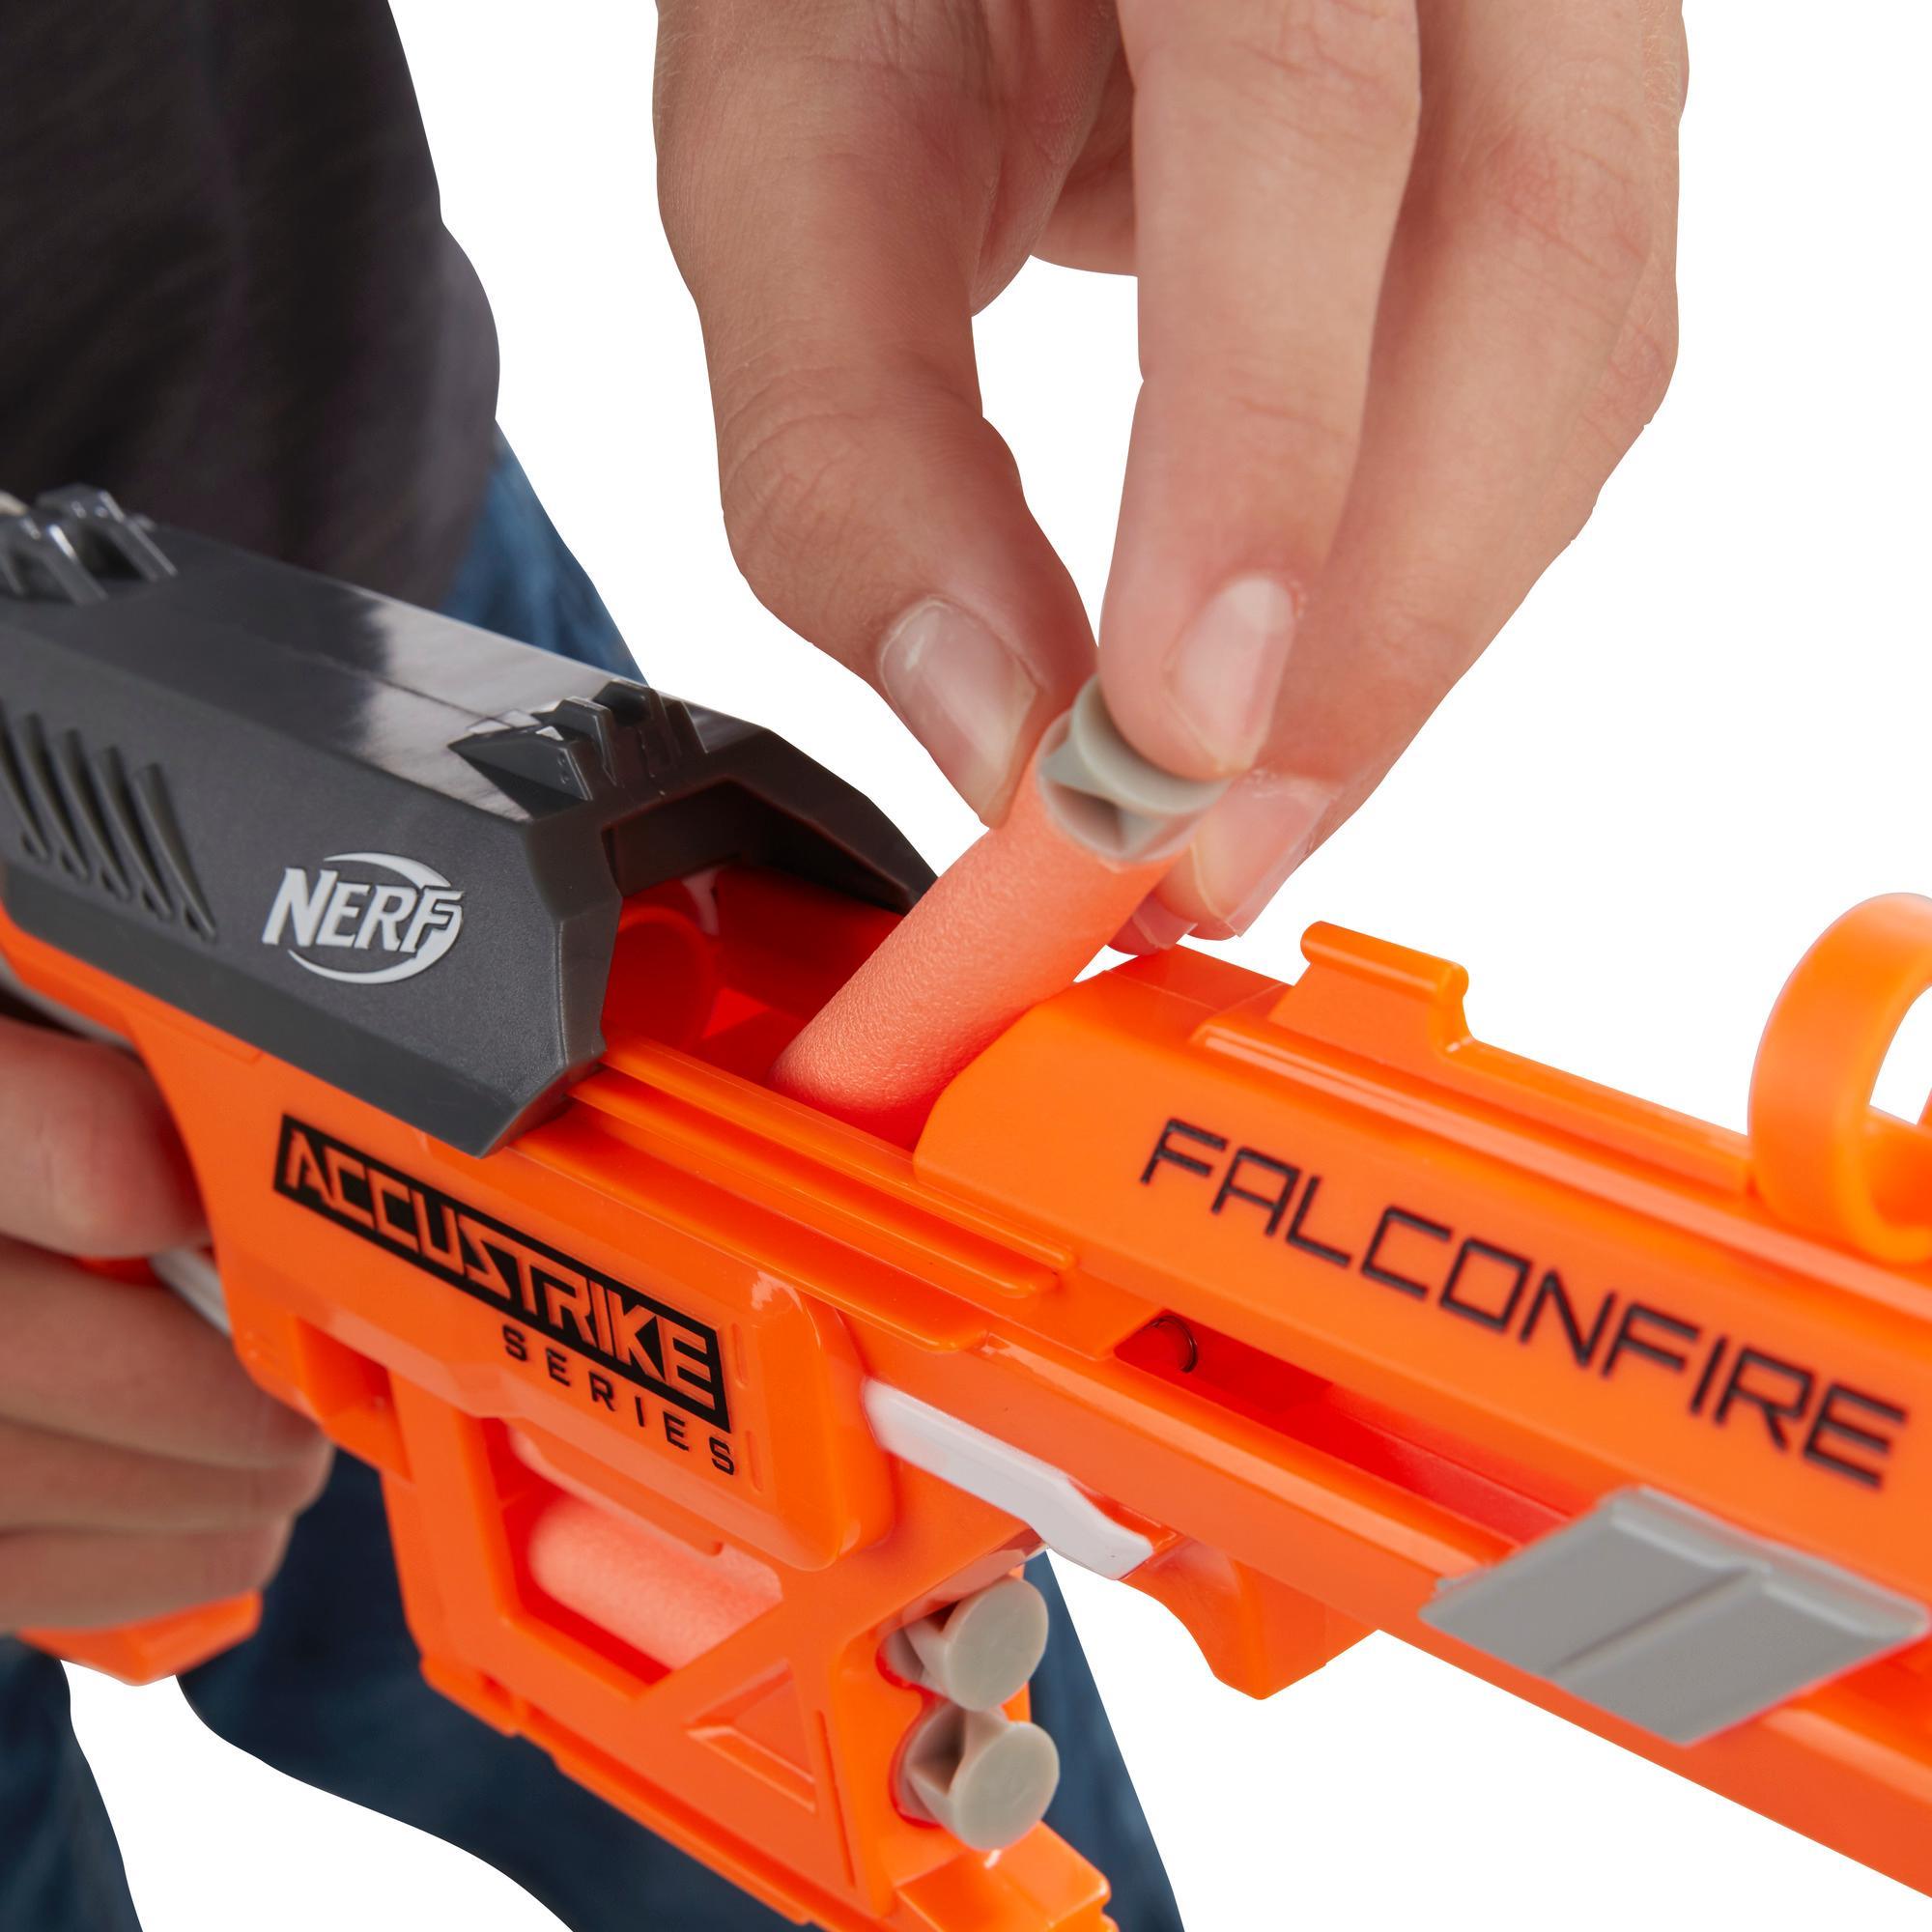 Blaster NERF AccuStrike Falconfire product thumbnail 1